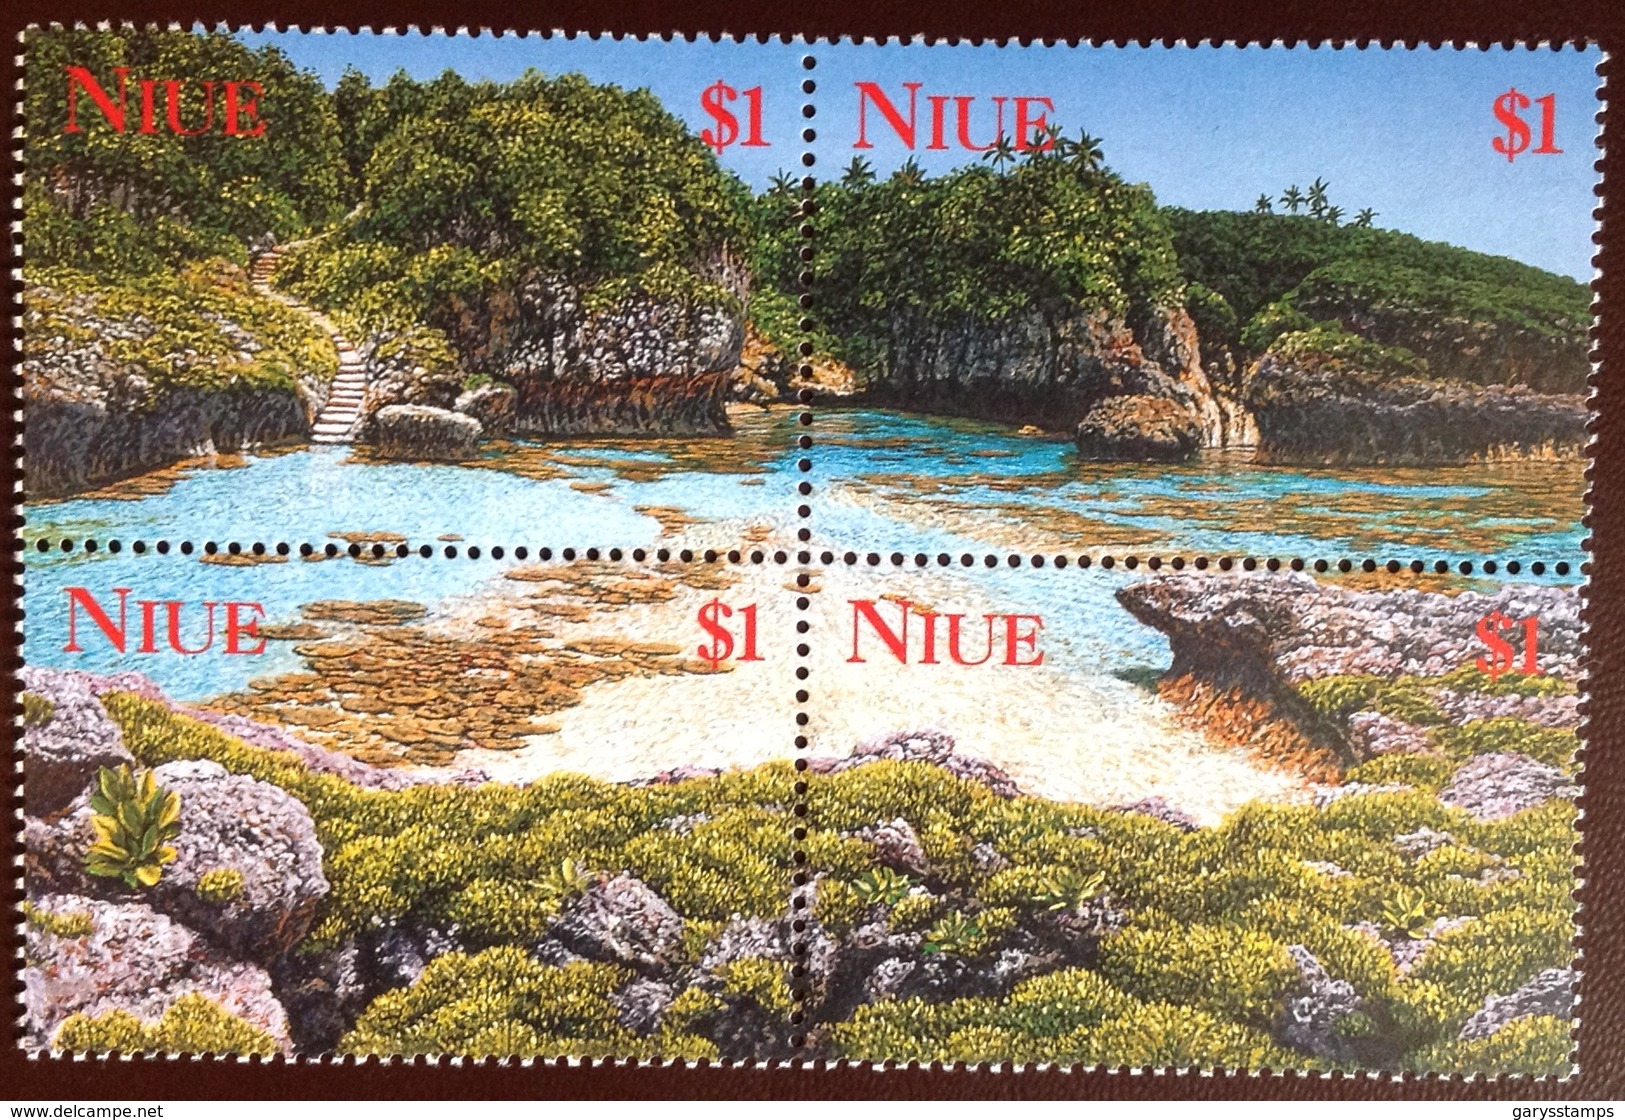 Niue 1997 Island Scenes MNH - Niue